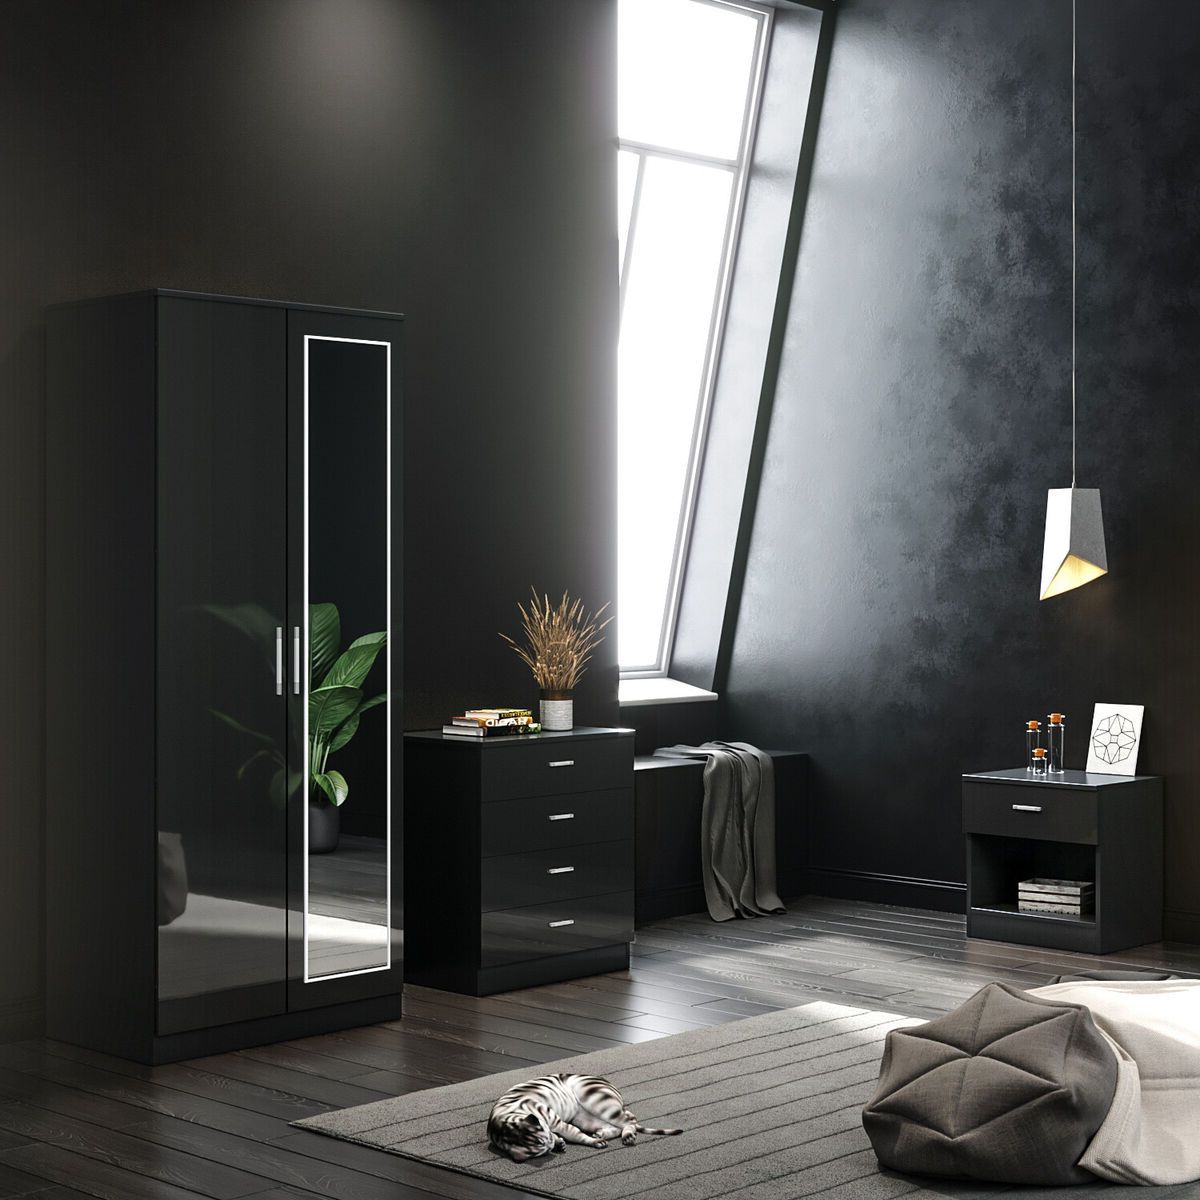 High Gloss 2 Door All Black Wardrobe Bedroom Furniture Storage With Hanging  Rail | Ebay Regarding Gloss Black Wardrobes (View 18 of 20)